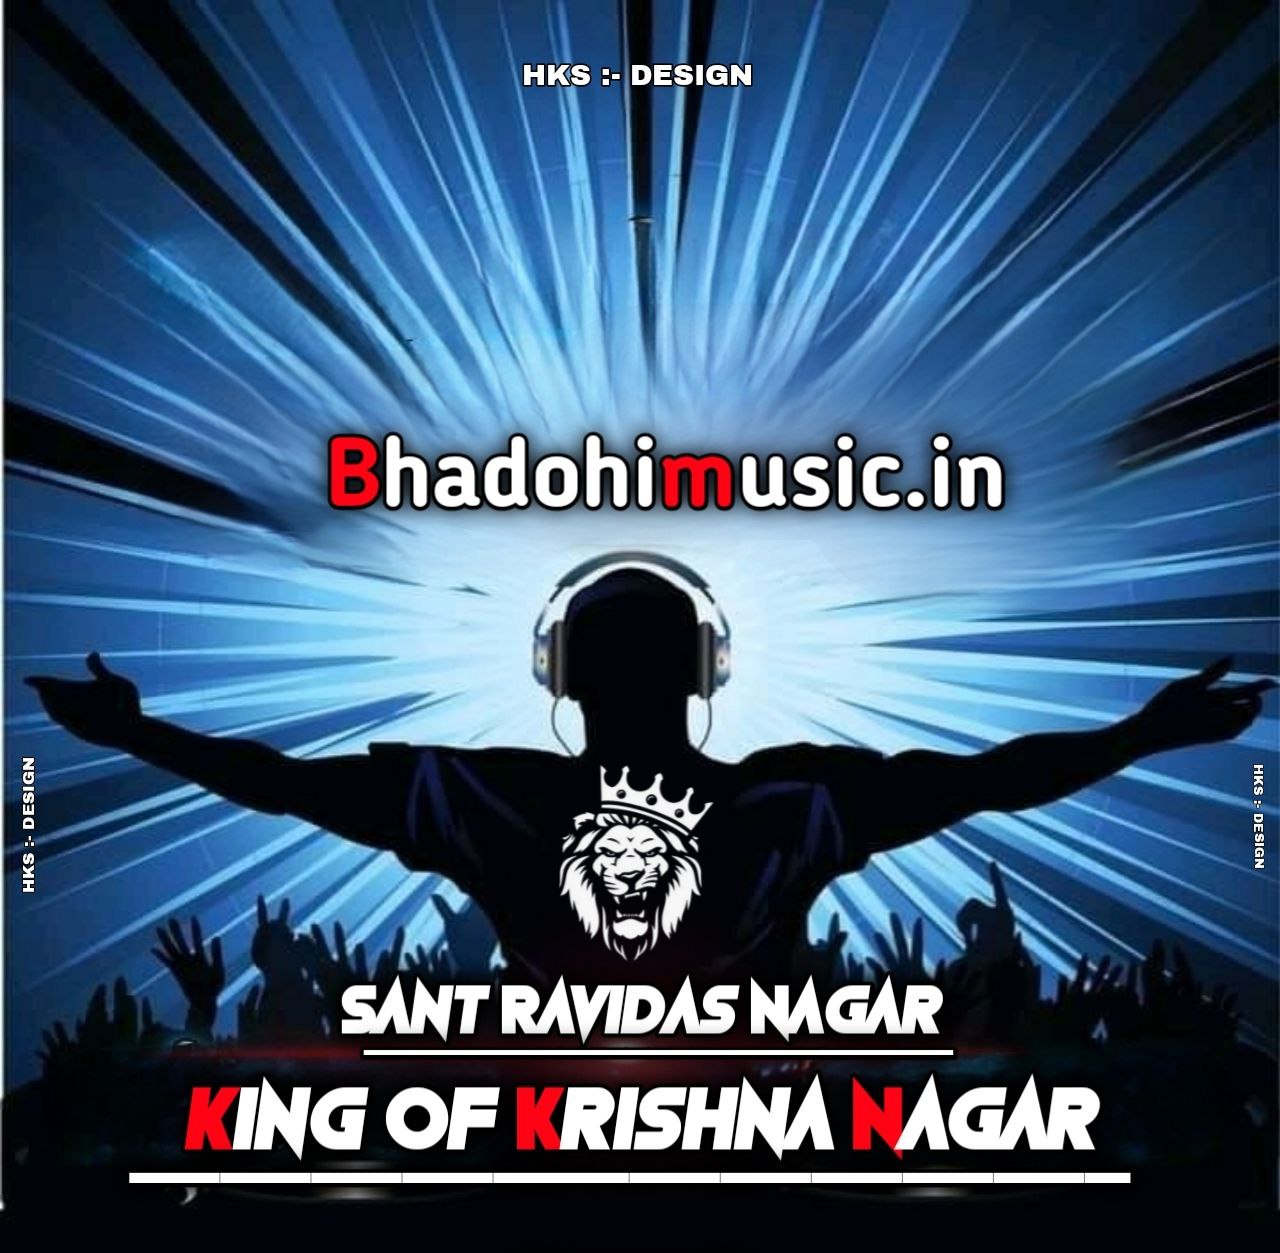 Tuition Wali Khesari Lal Yadav Mp3 Song Manish DJ Machhali Shahar